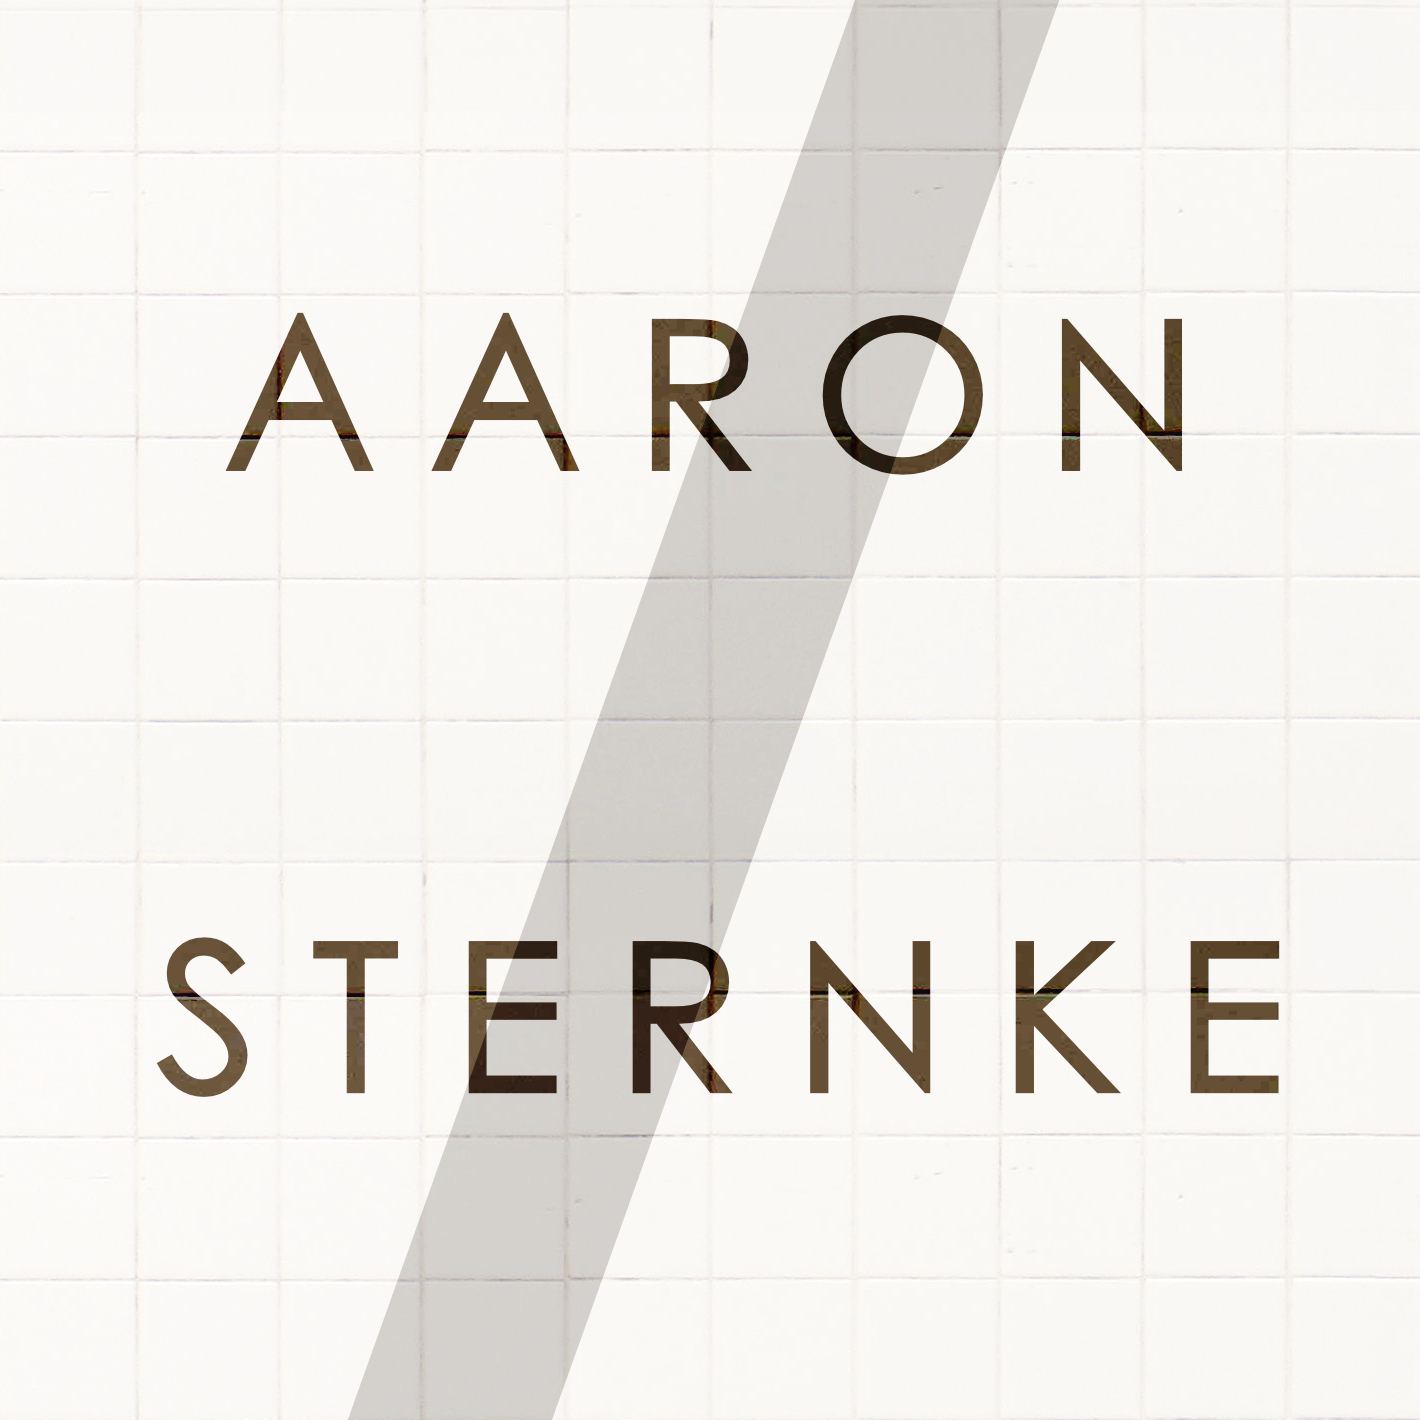 Aaron Sternke